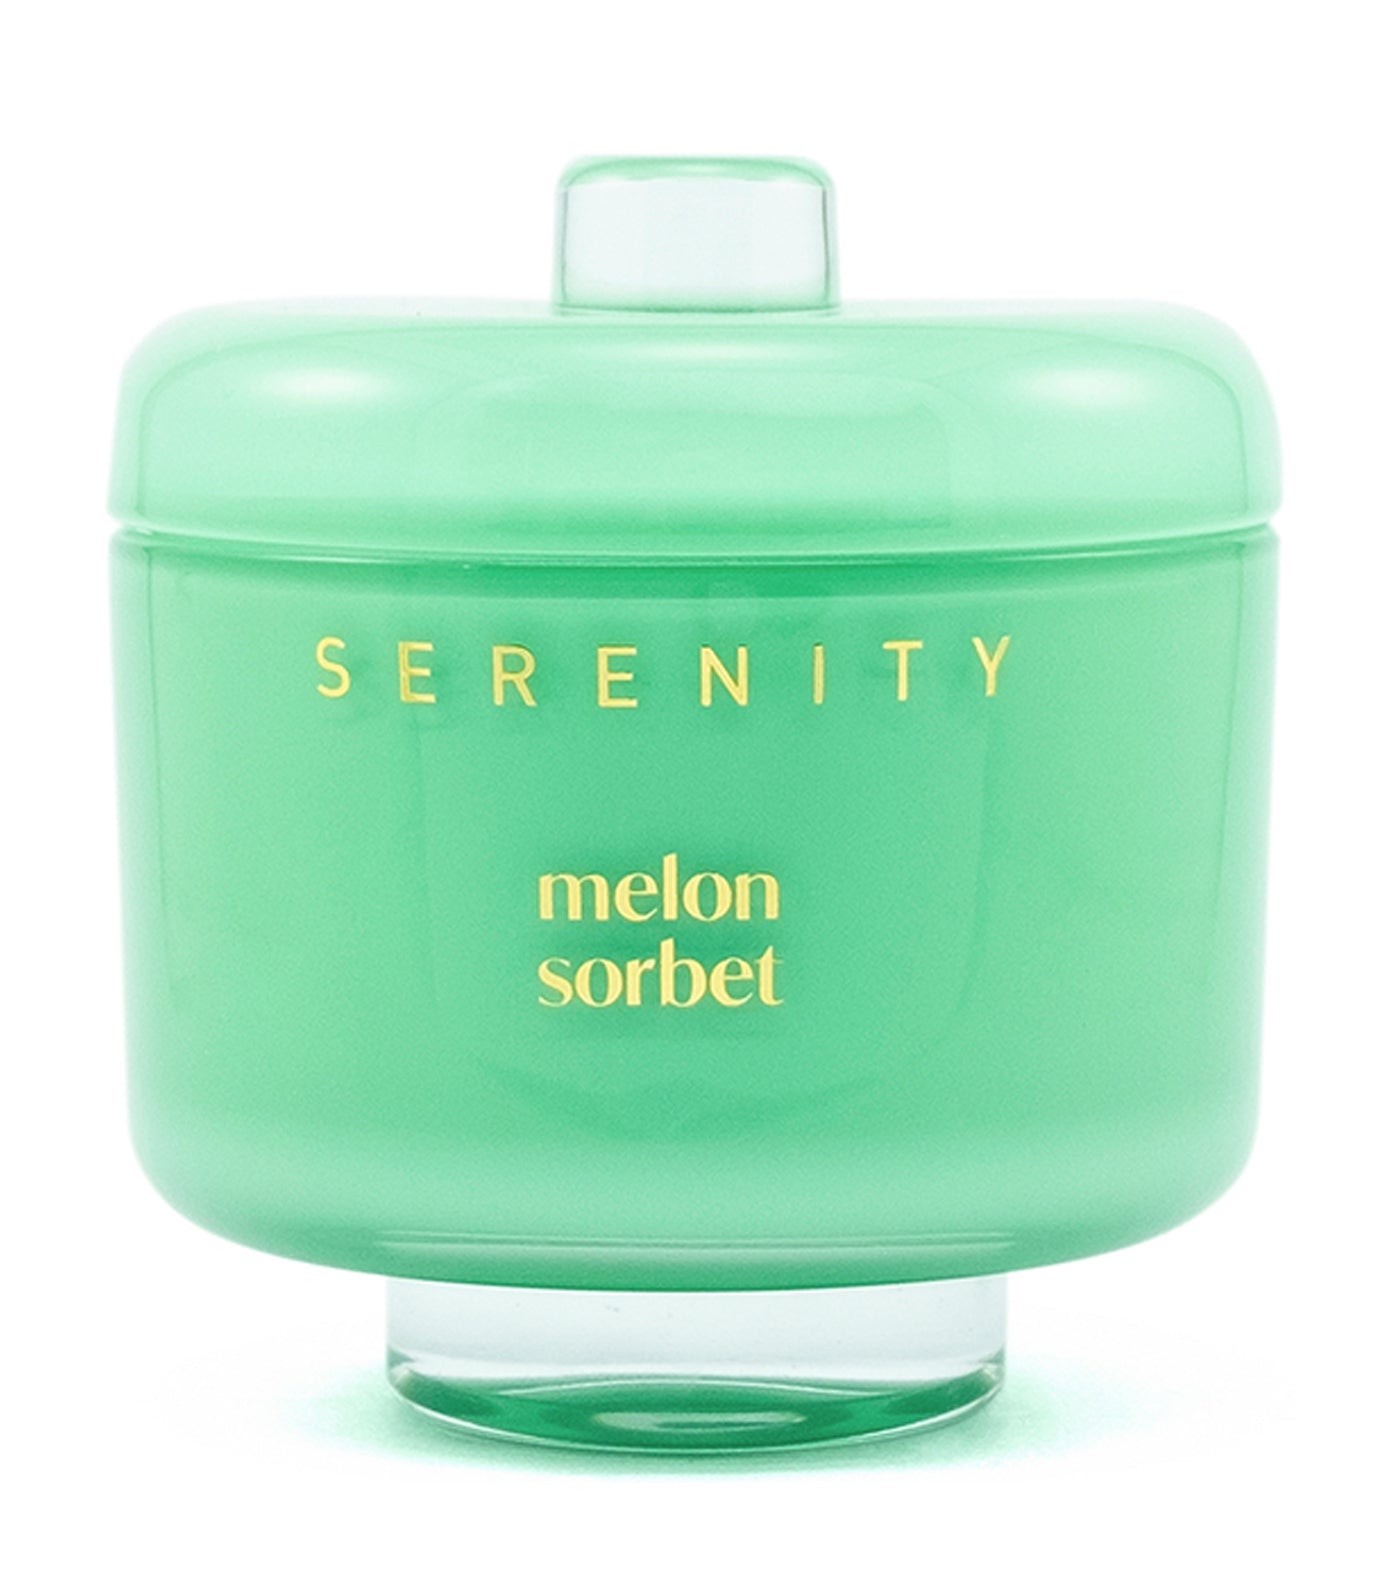 serenity vivid melon sorbet scented candle